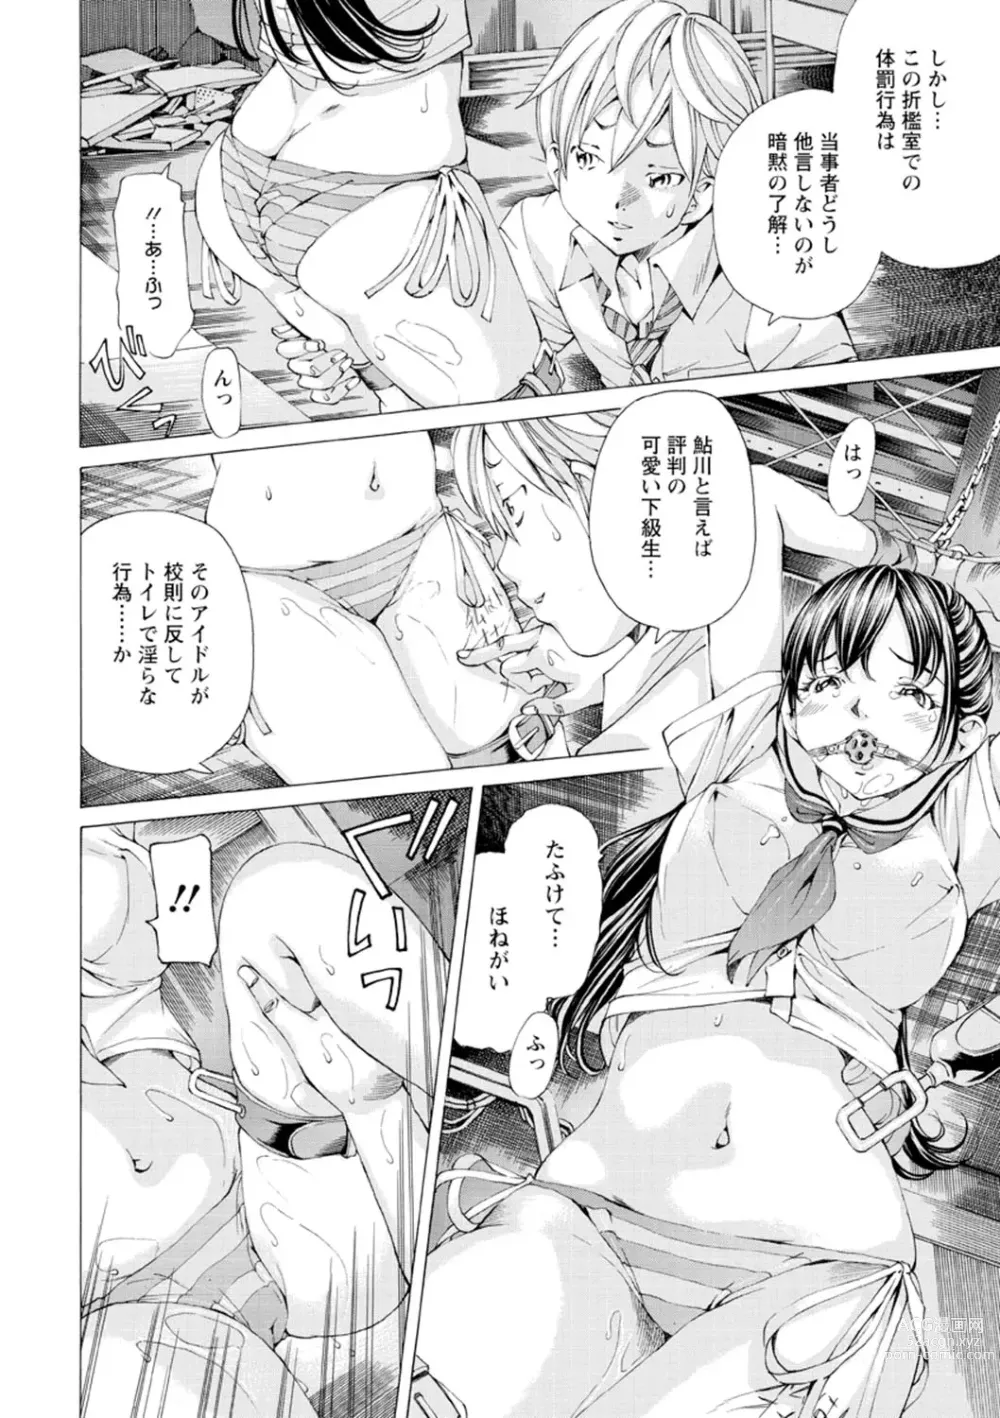 Page 9 of manga M-kko Sekkan Club - Masochistic JK Spanking CLUB!!!!